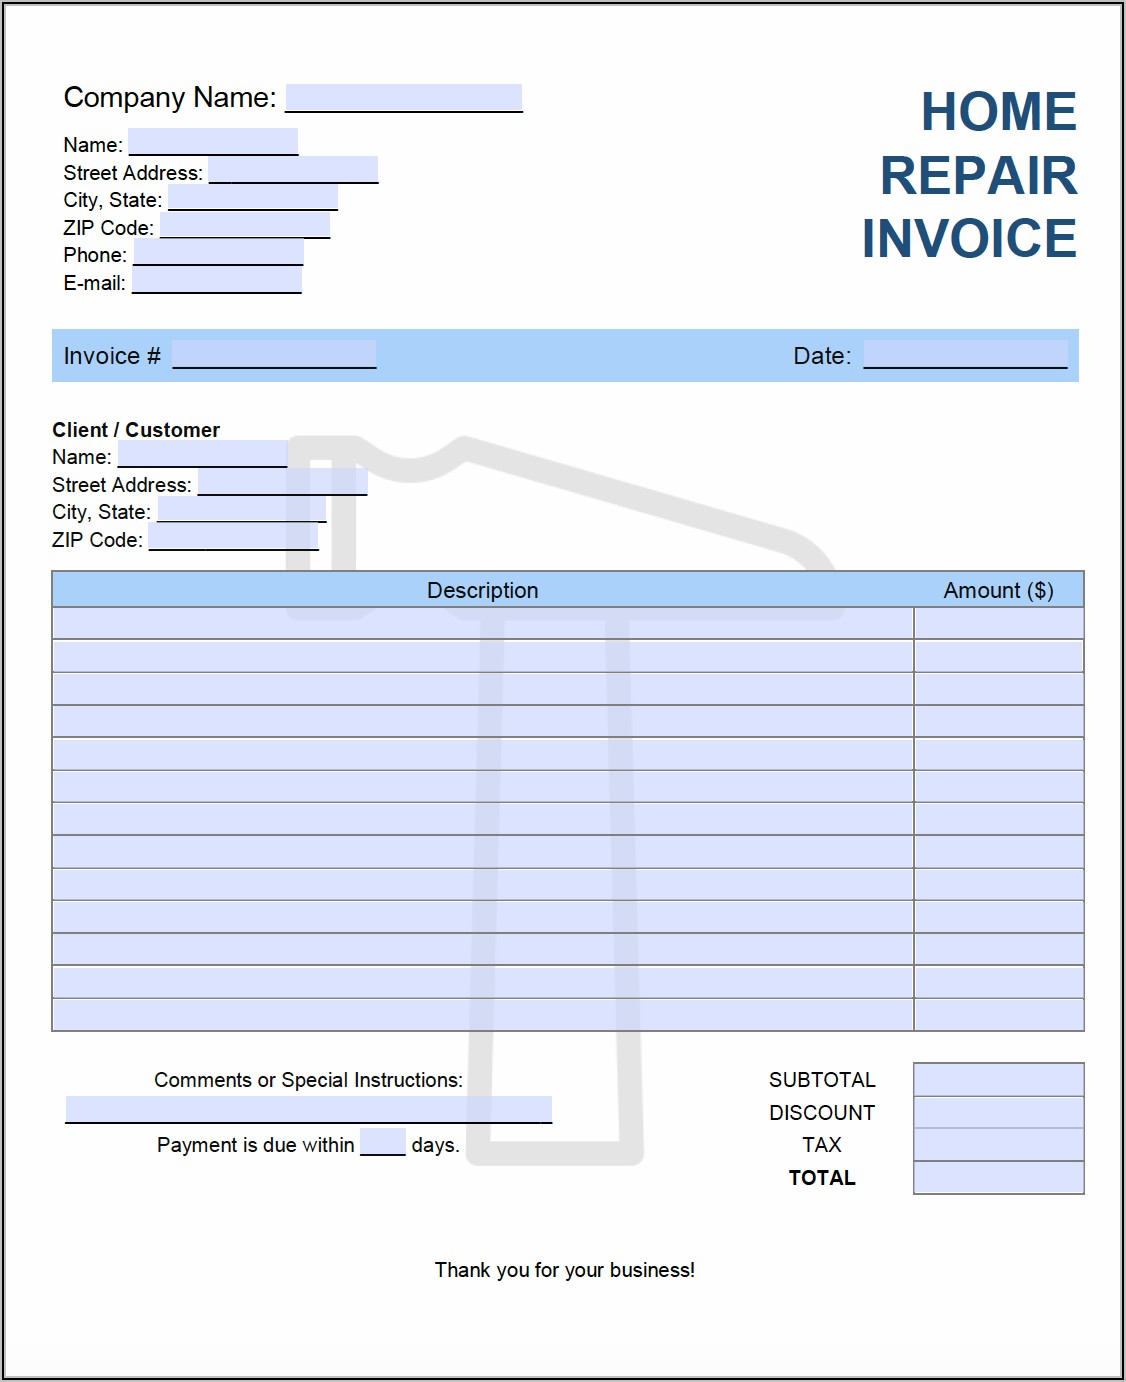 Home Repair Invoice Template Free